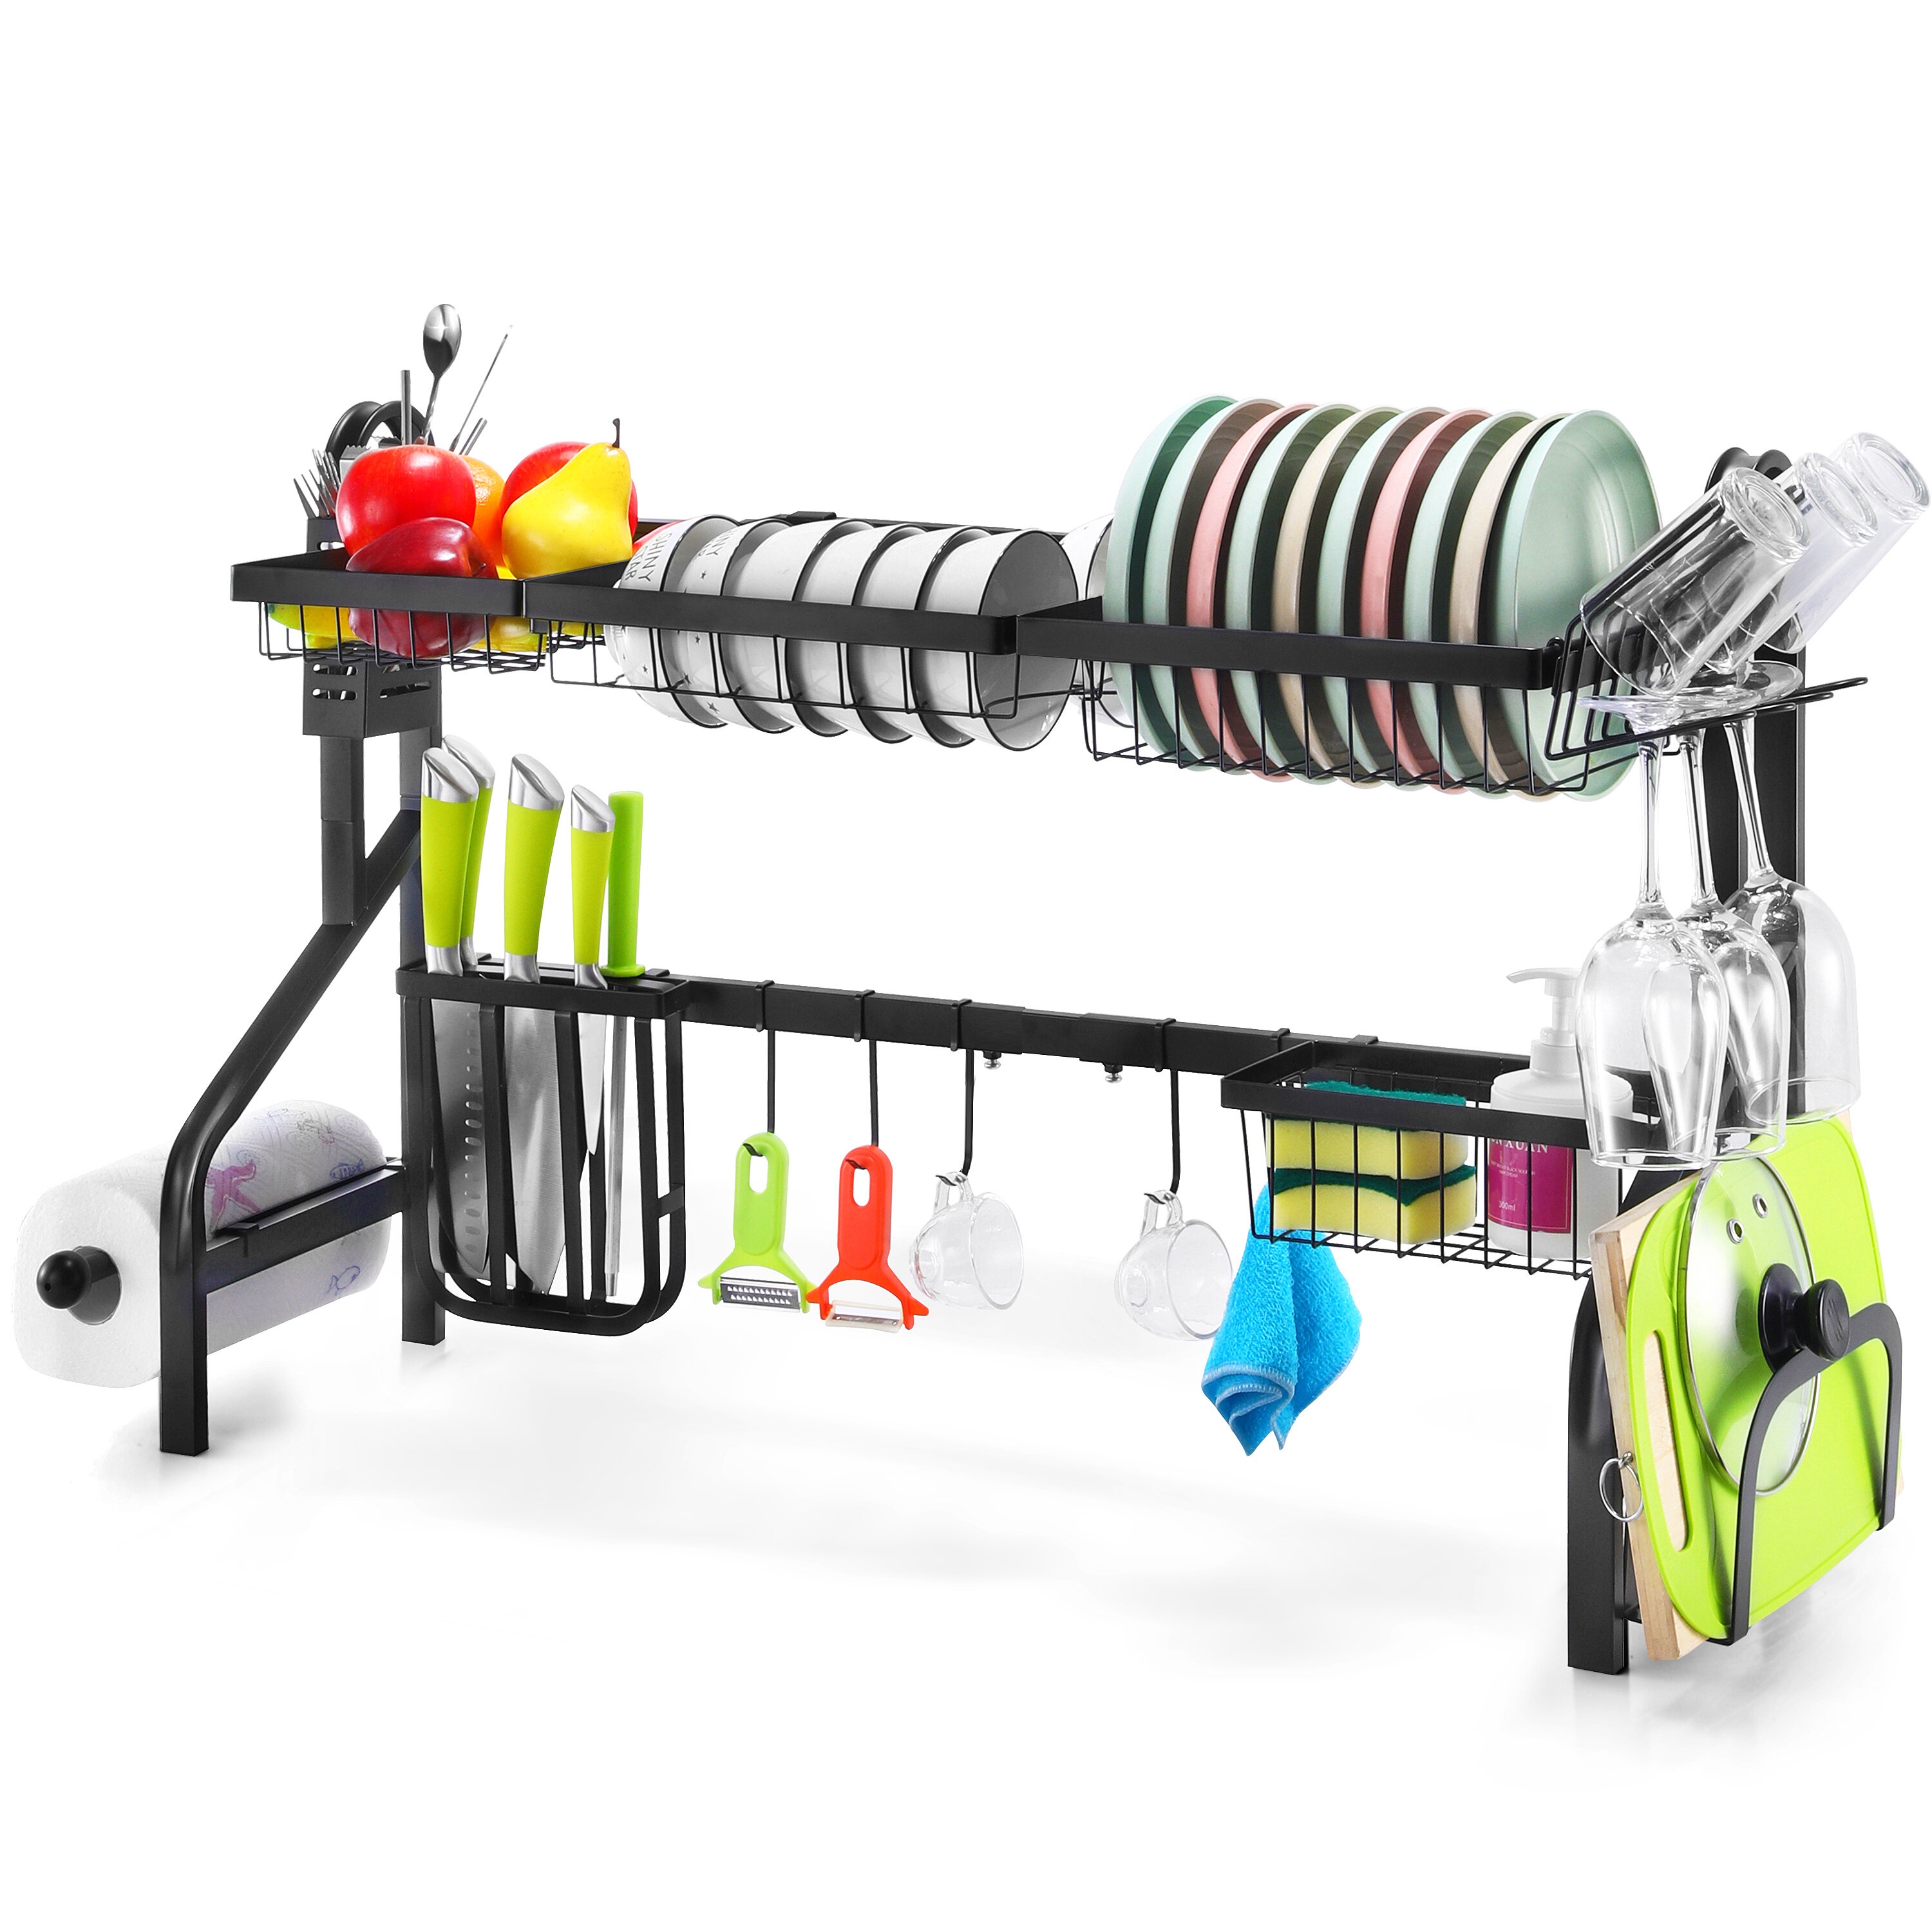 https://visualhunt.com/photos/23/adjustable-dish-drying-rack-over-sink.jpg